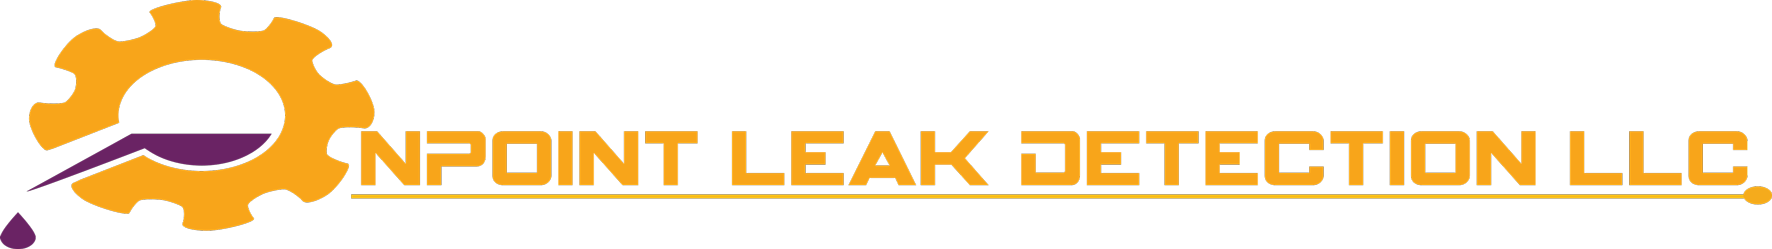 Onpoint Leak Detection